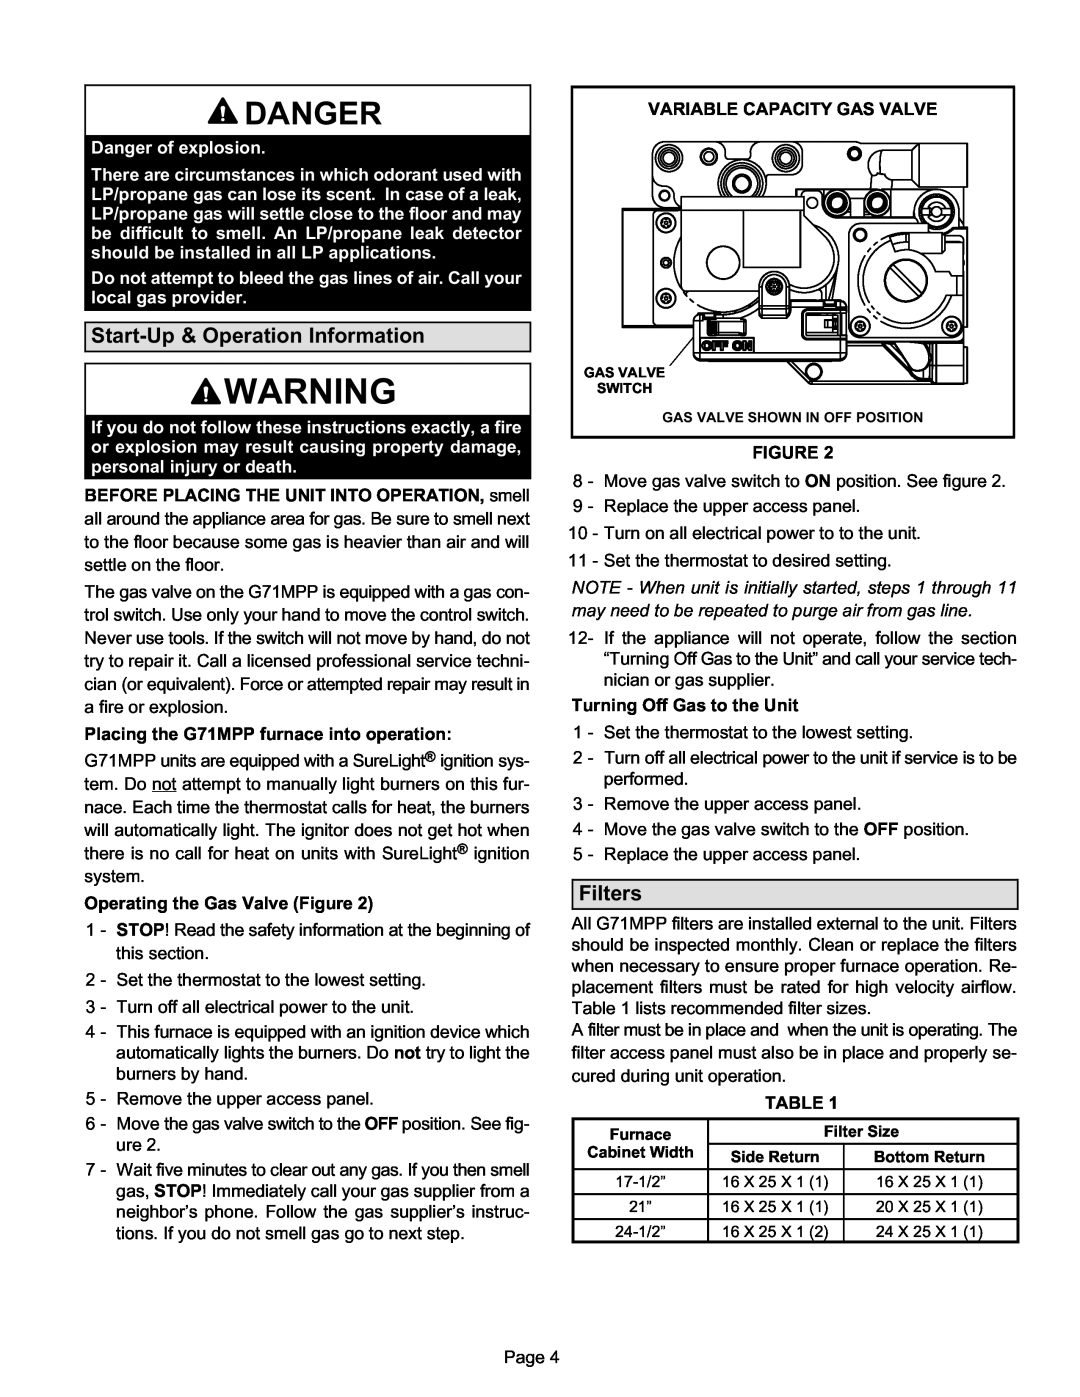 Lennox International Inc G71MPP manual Danger, Start−Up & Operation Information, Filters 